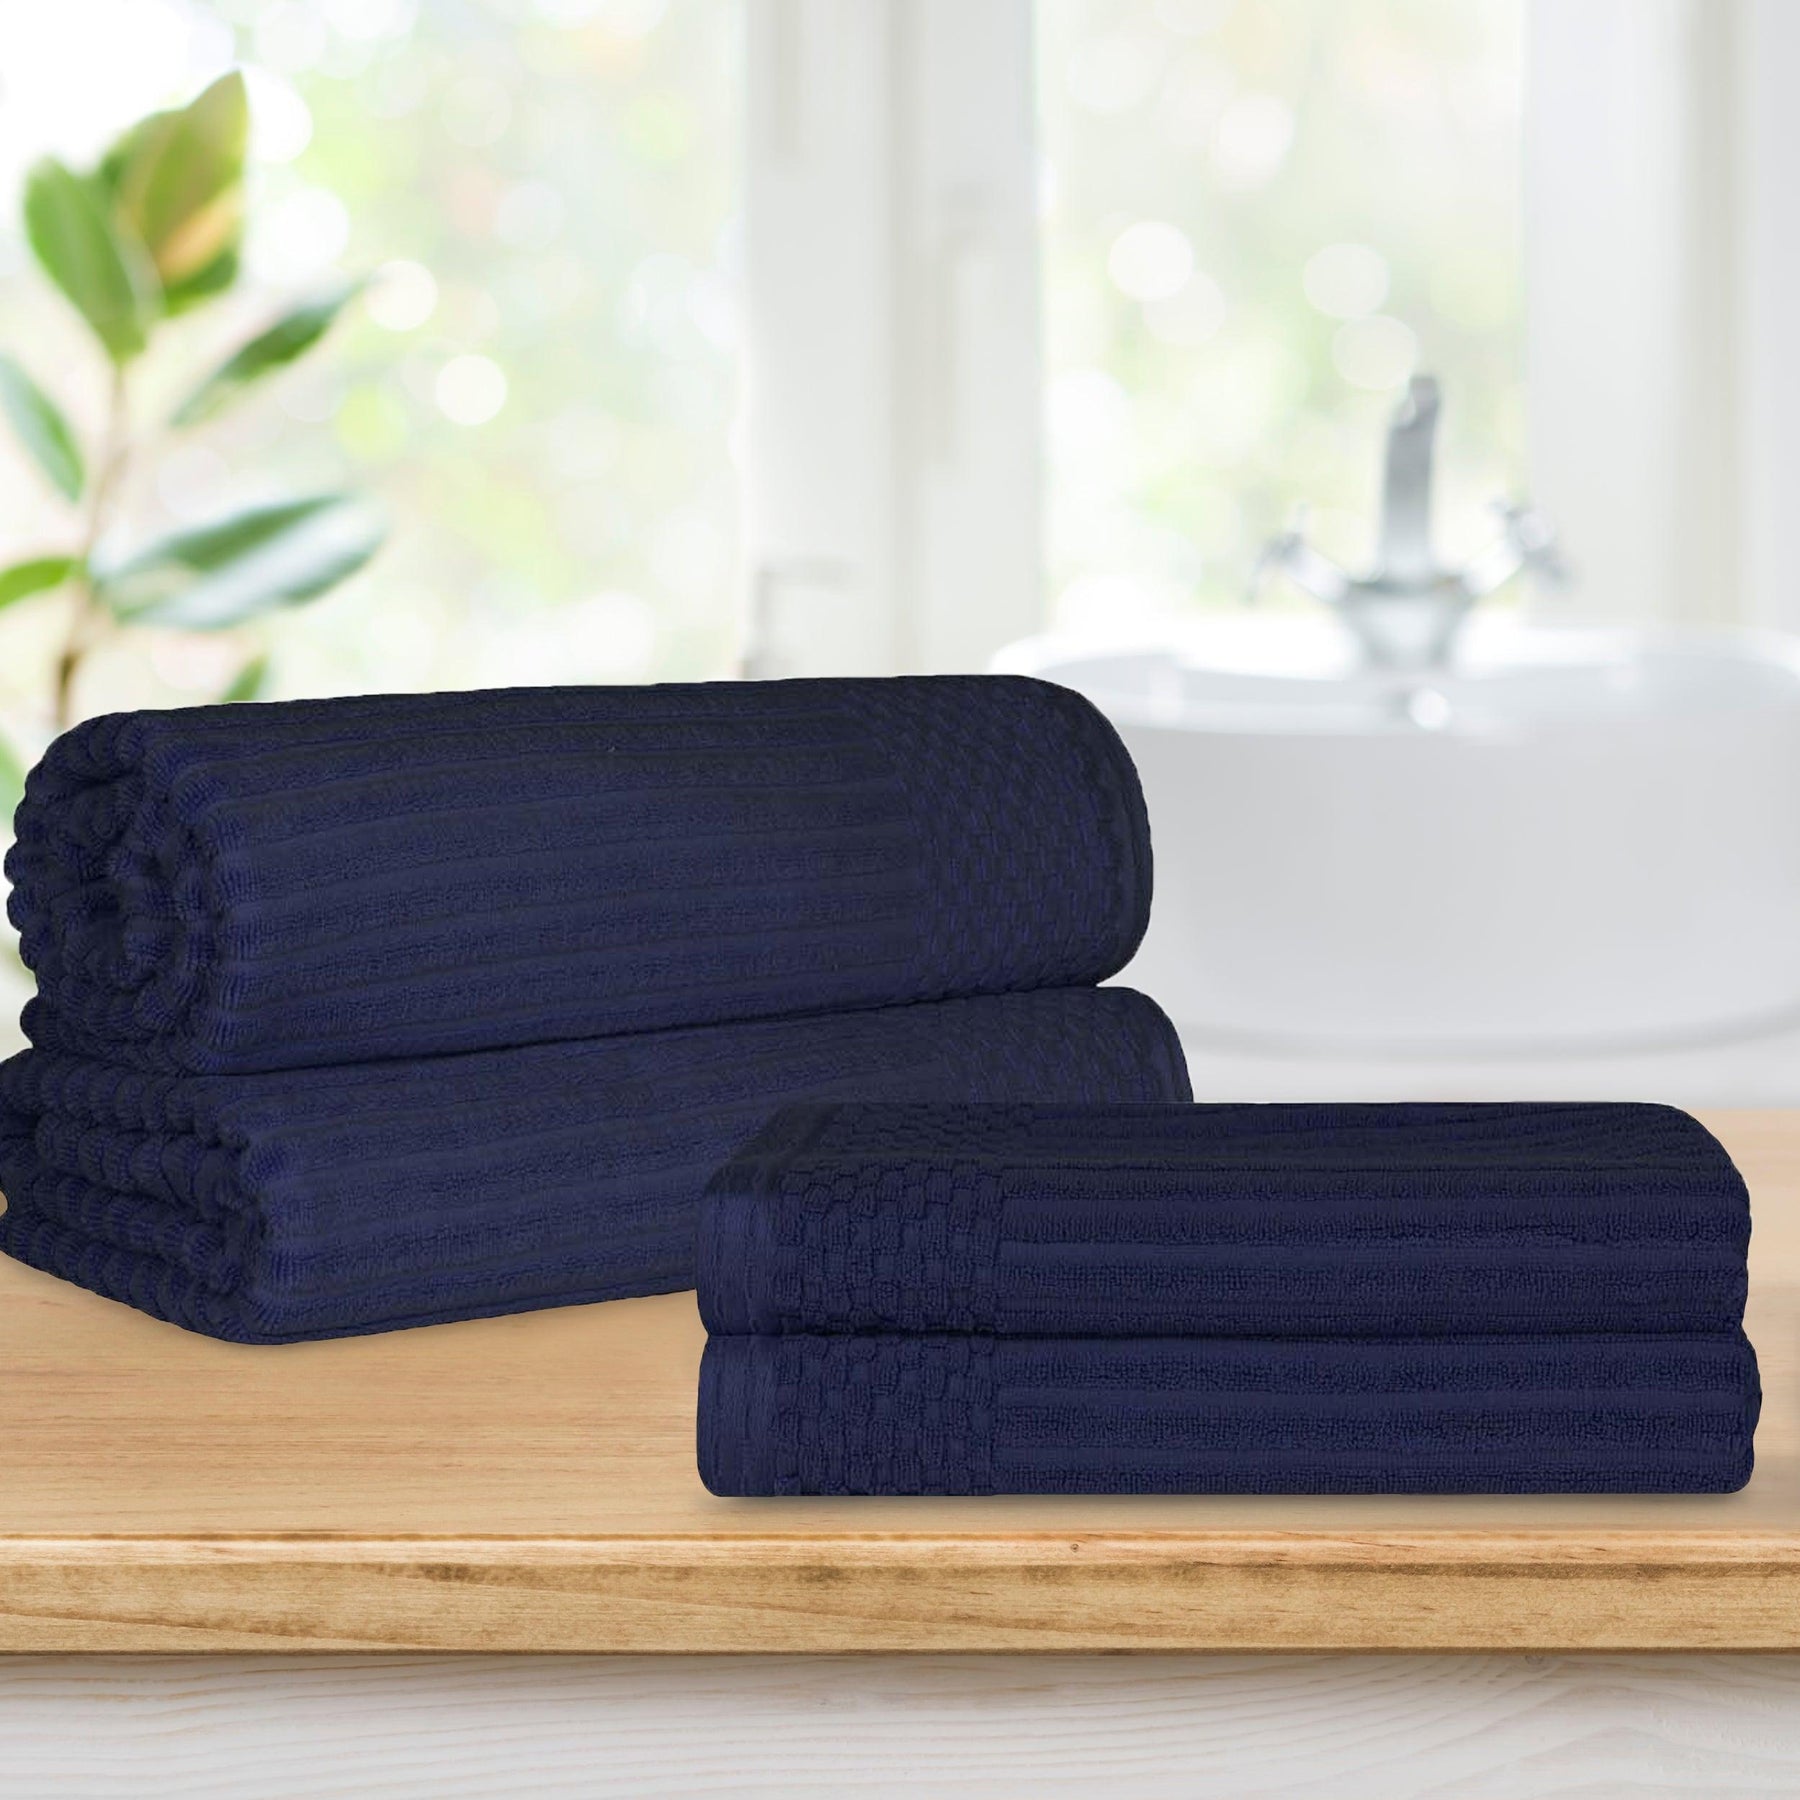  Superior Soho Ribbed Textured Cotton Ultra-Absorbent Bath Sheet & Bath Towel Set - Navy Blue